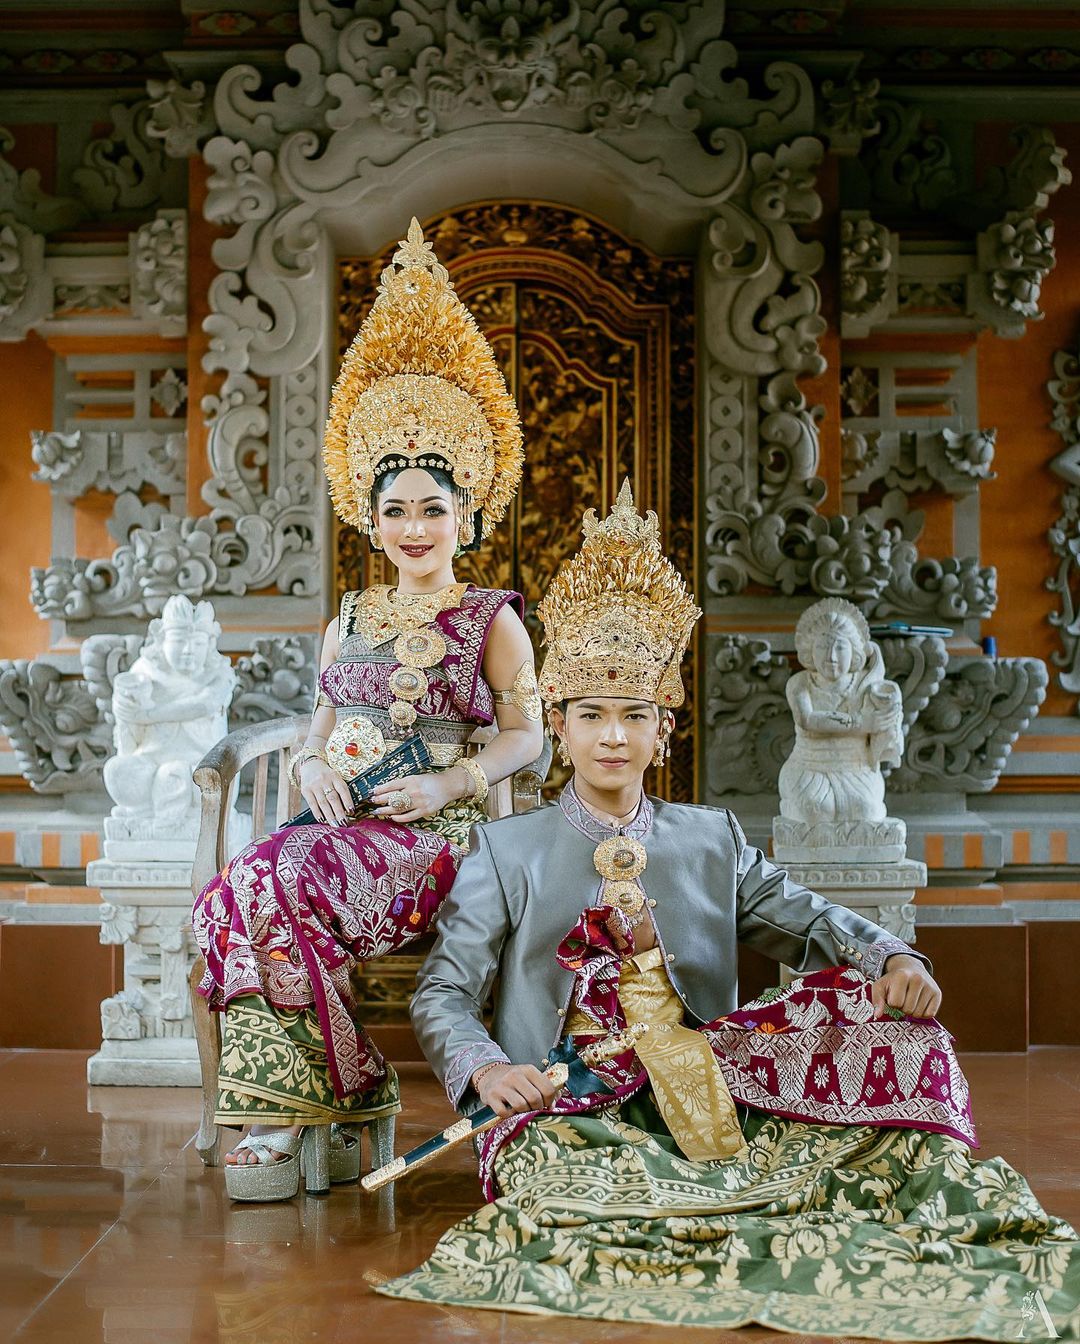 Payas Agung Bali